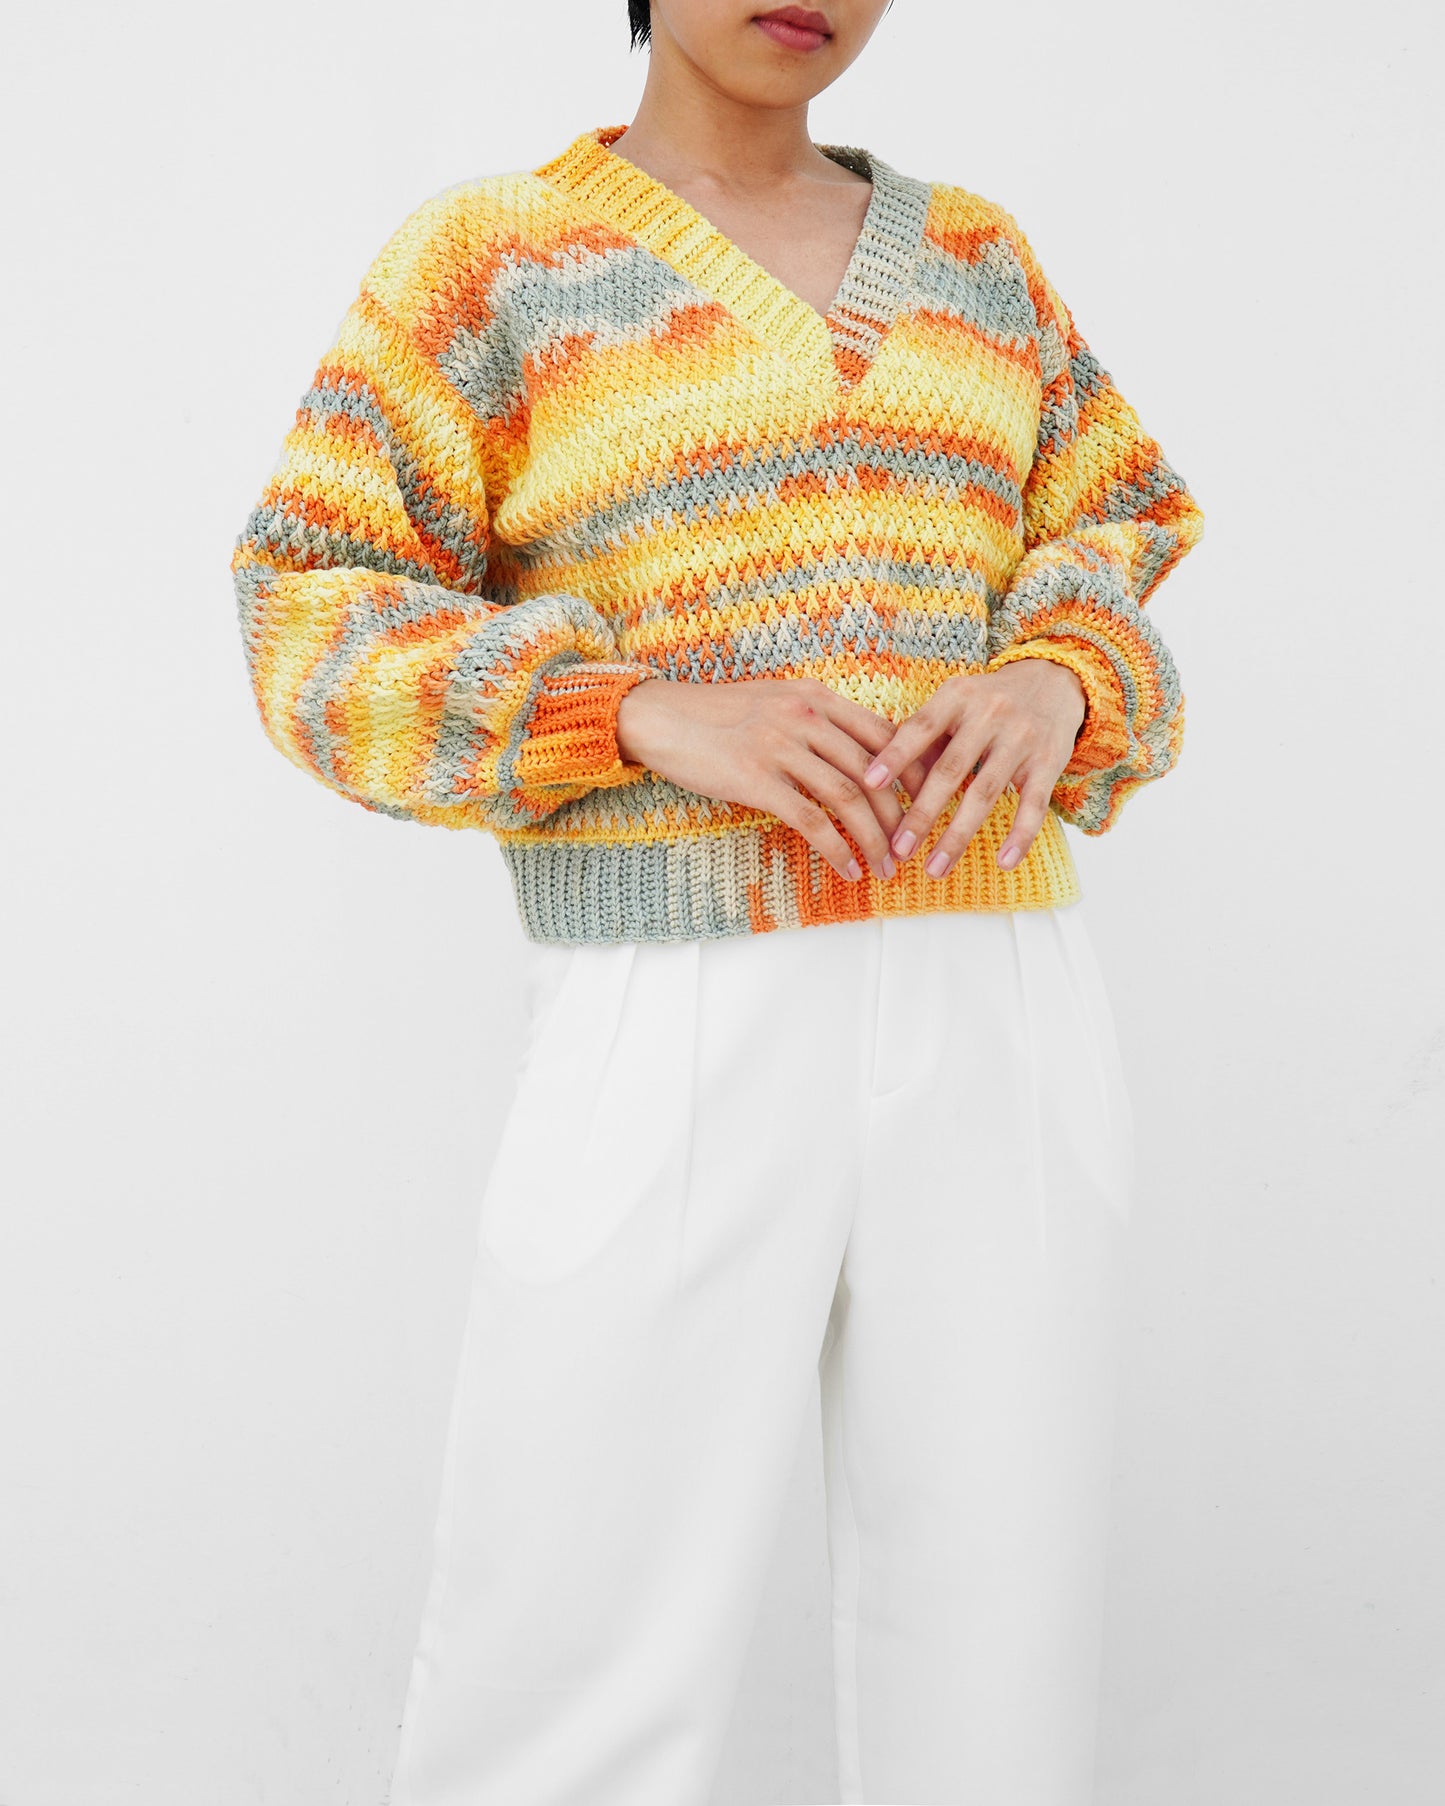 Sweater No.32 | V-neck sweater crochet pattern